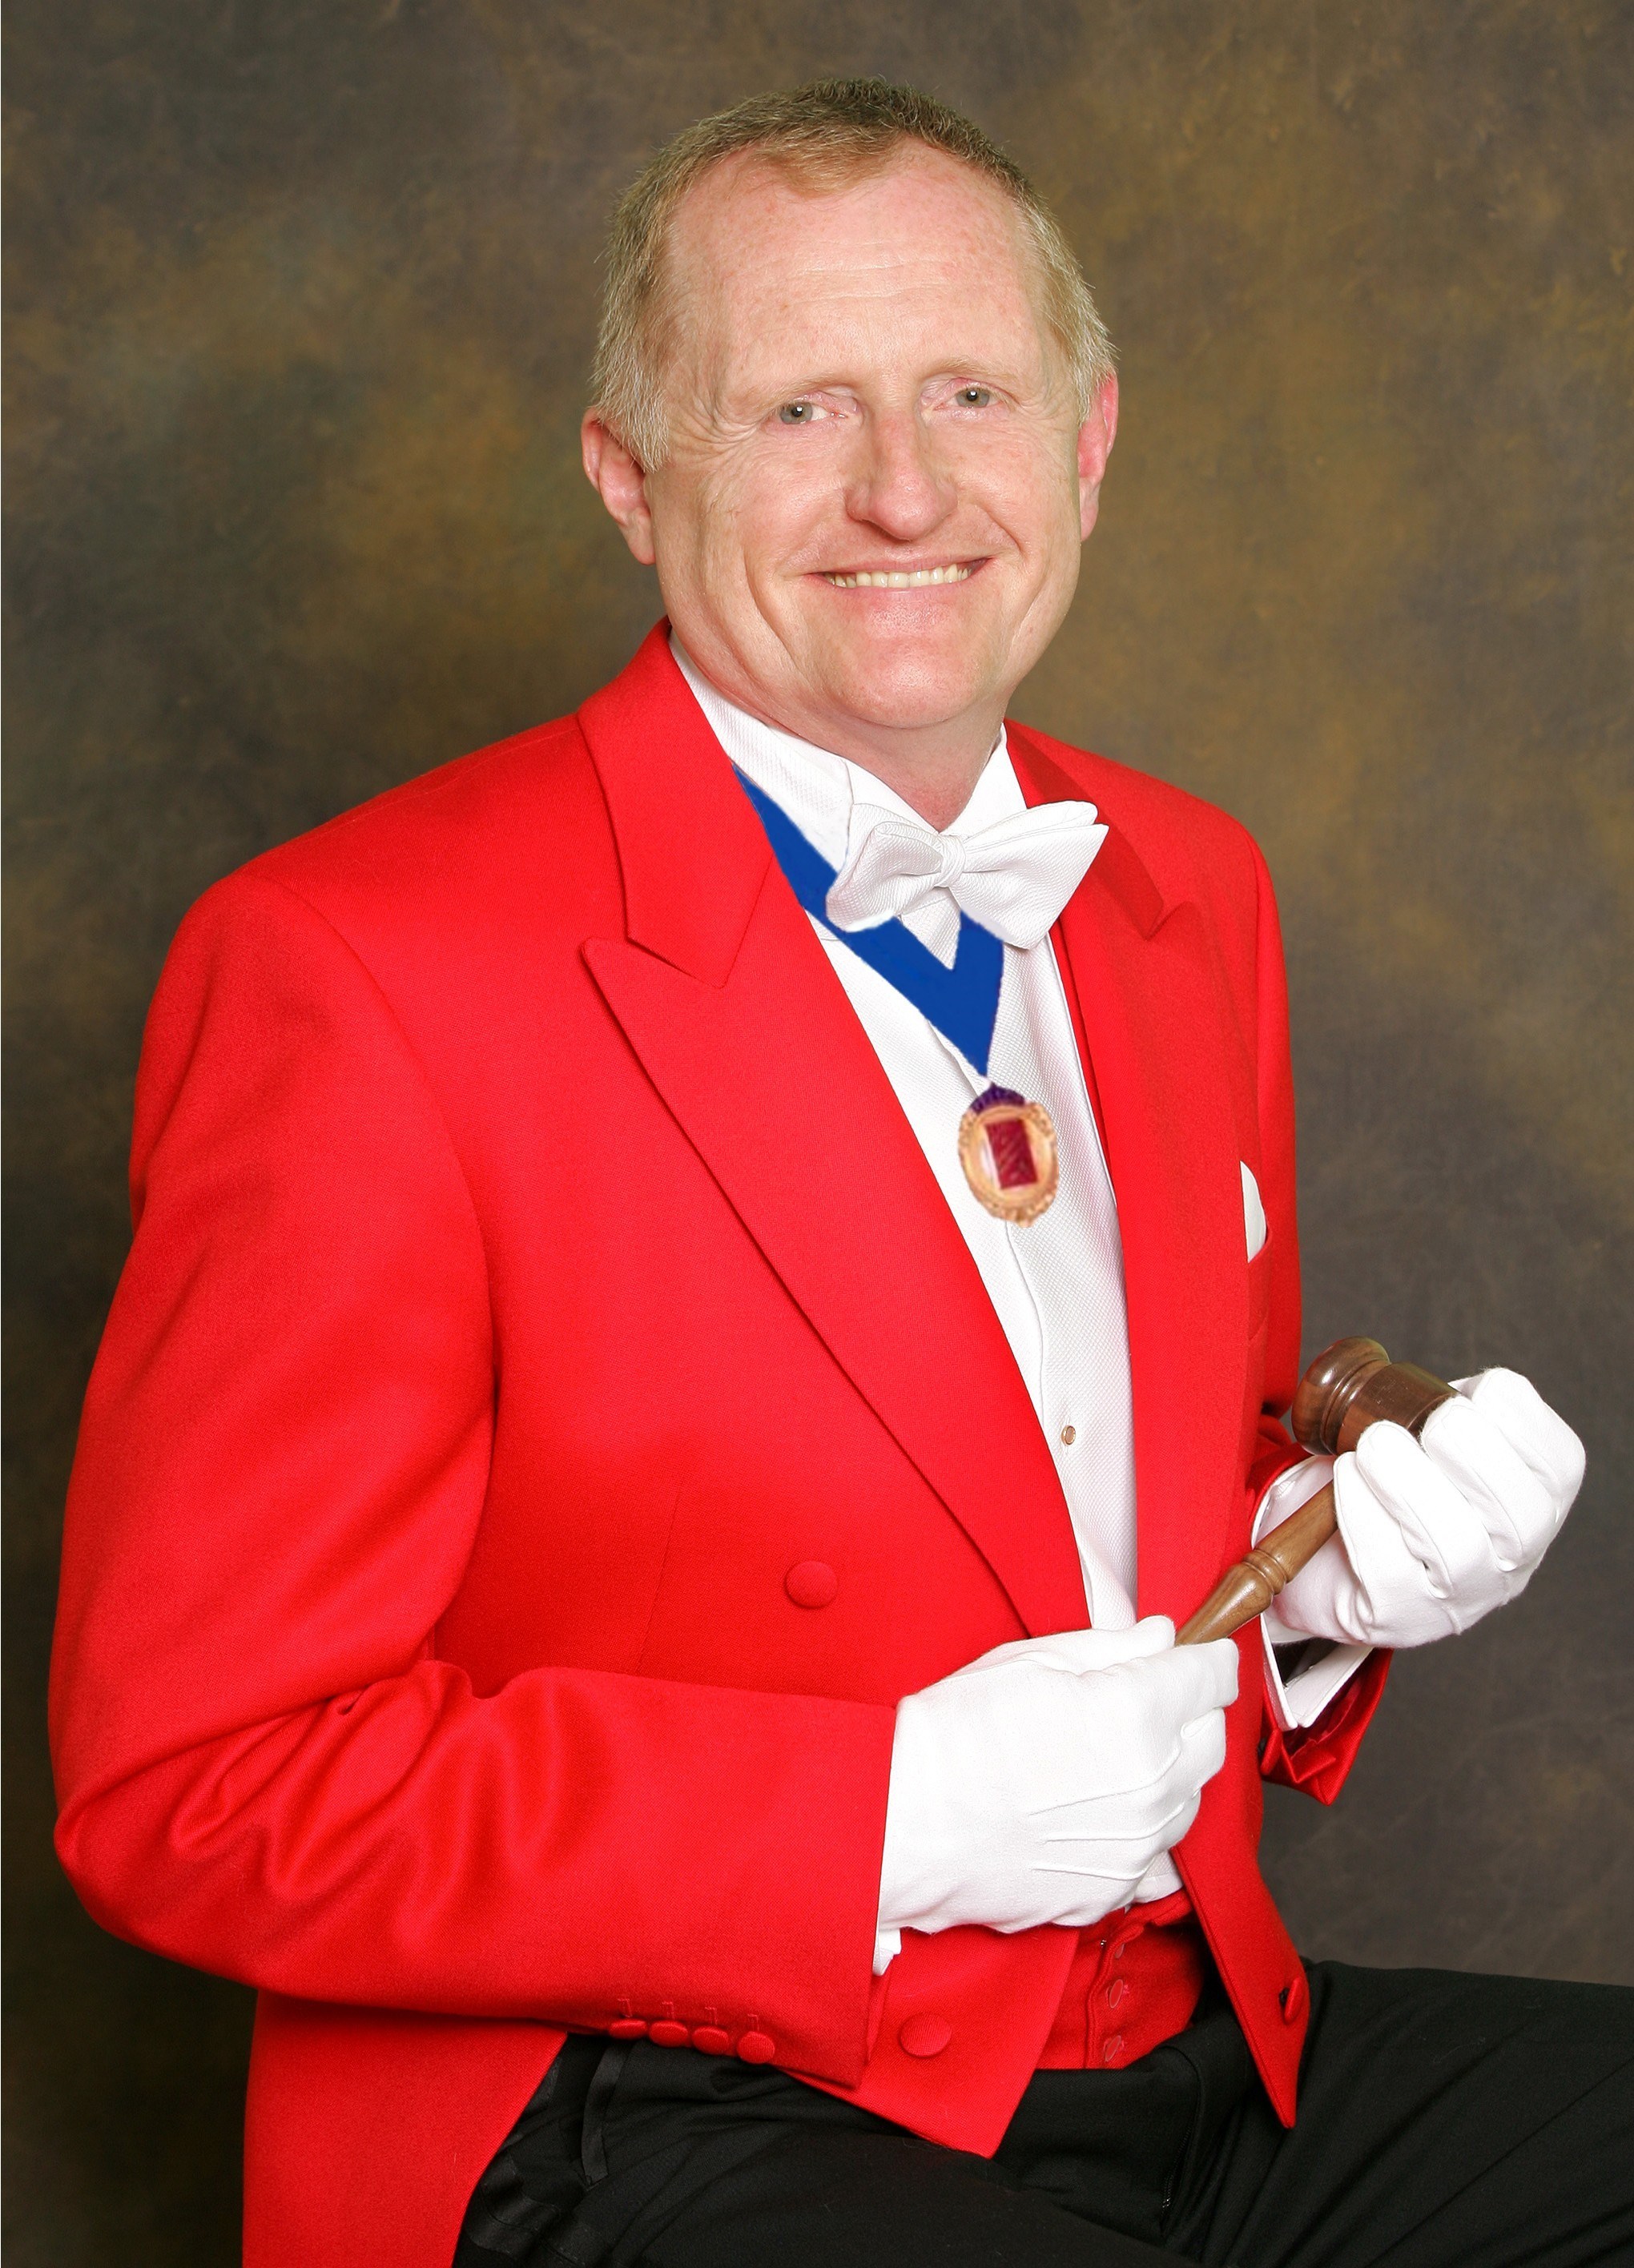 Professional Toastmaster and Master of Ceremonies Essex - Richard Cawte